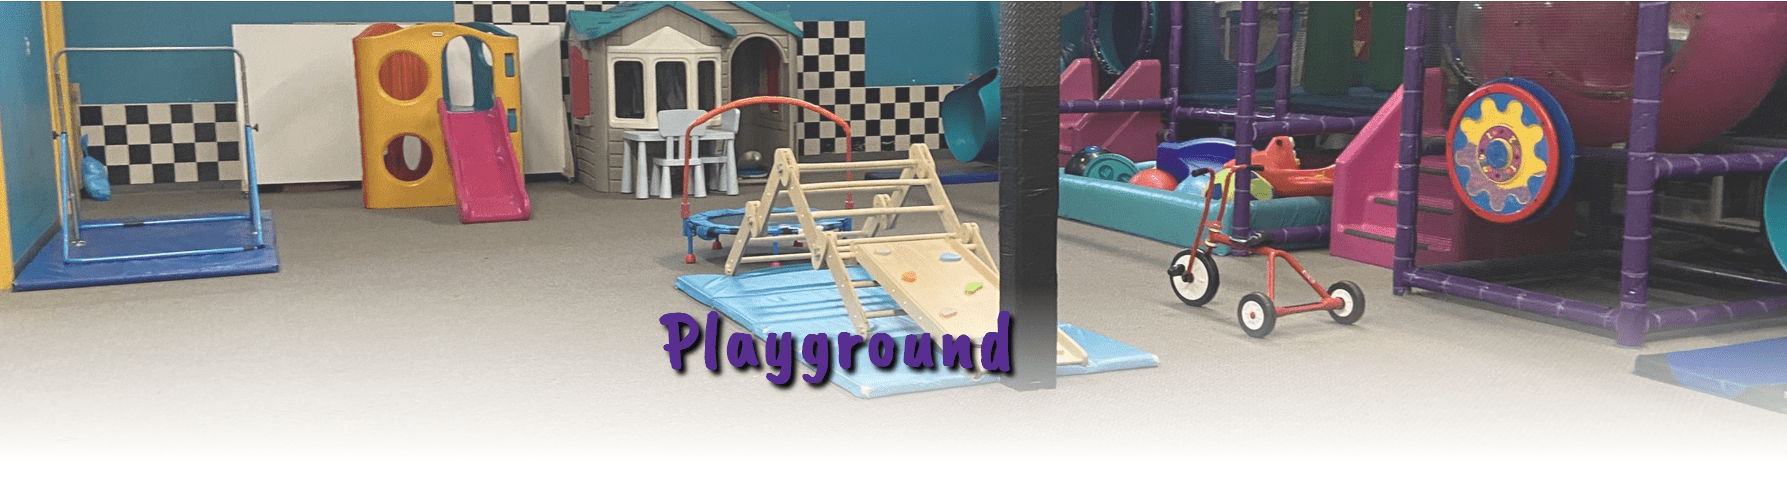 Eazy-Peazy Indoor Playground in Milton